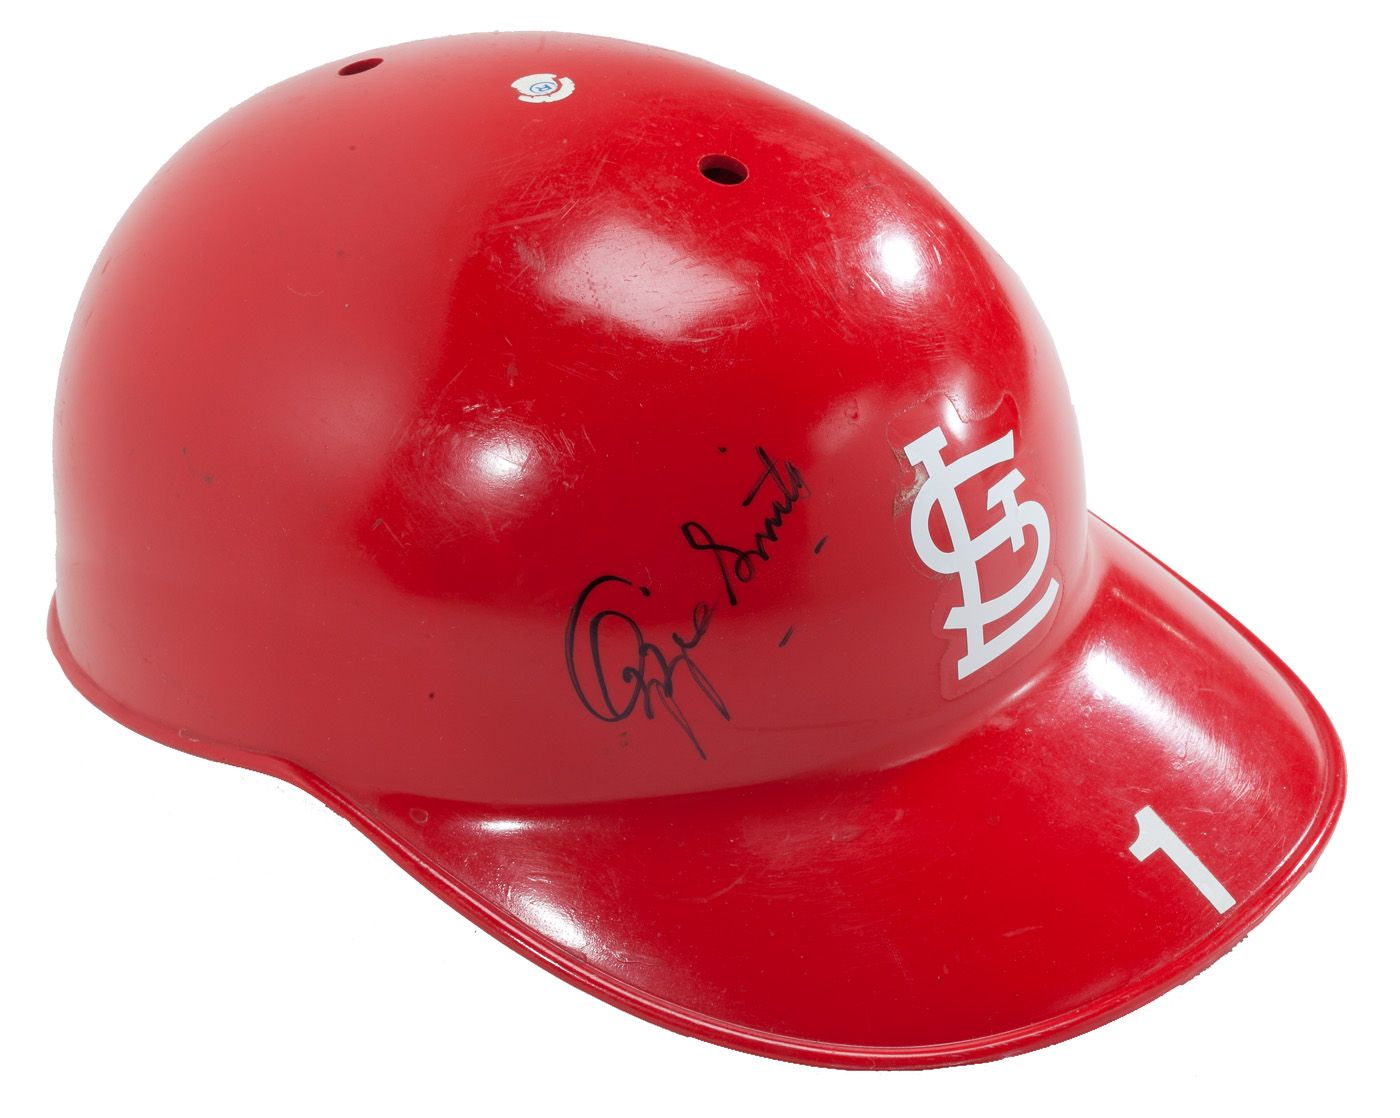 Discounted St. Louis Cardinals Memorabilia, Autographed Cardinals